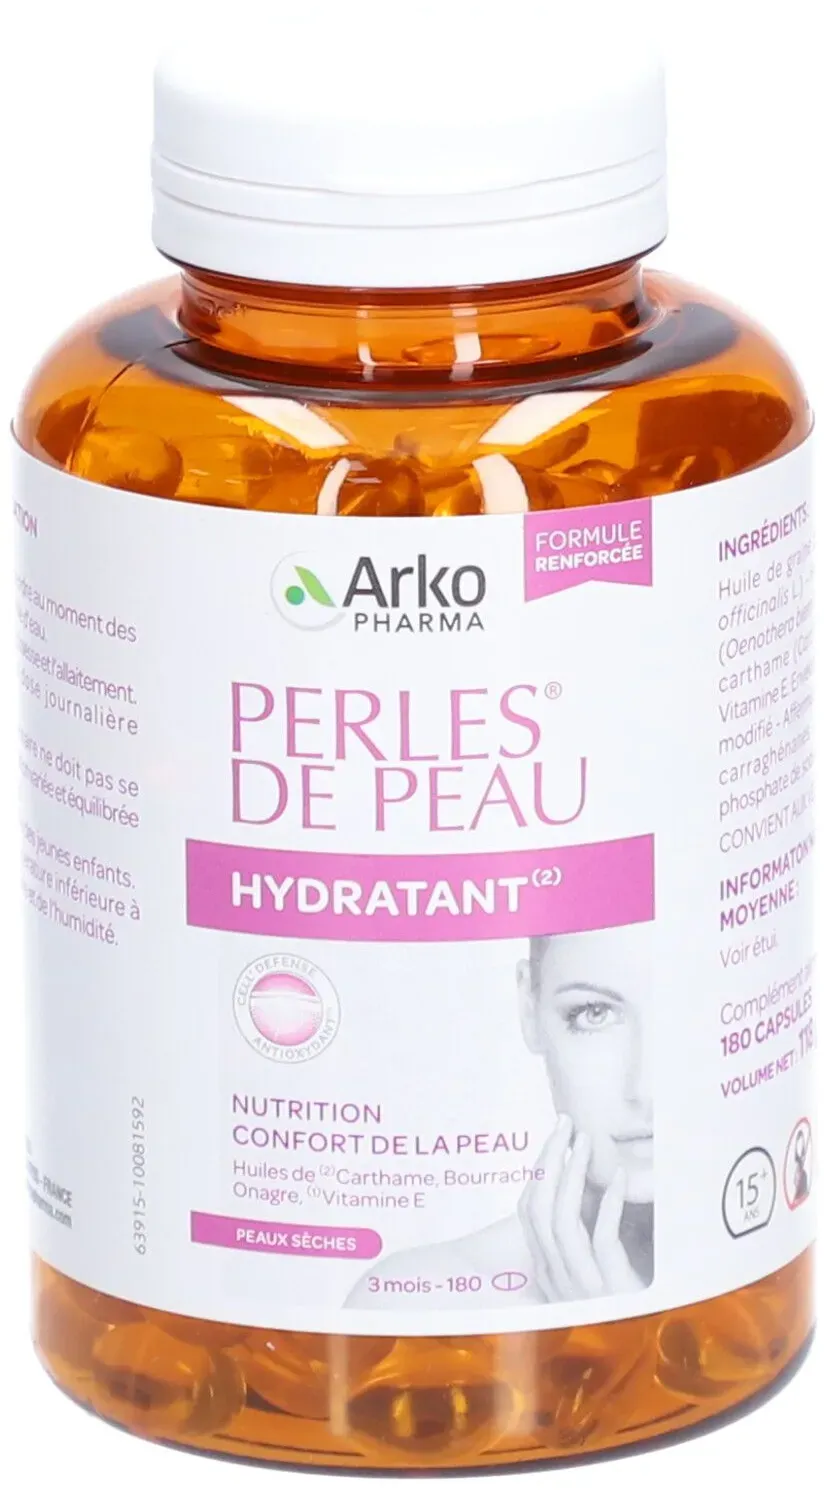 Arkopharma Perles de Peau® Hydratant 180 g capsule(s)